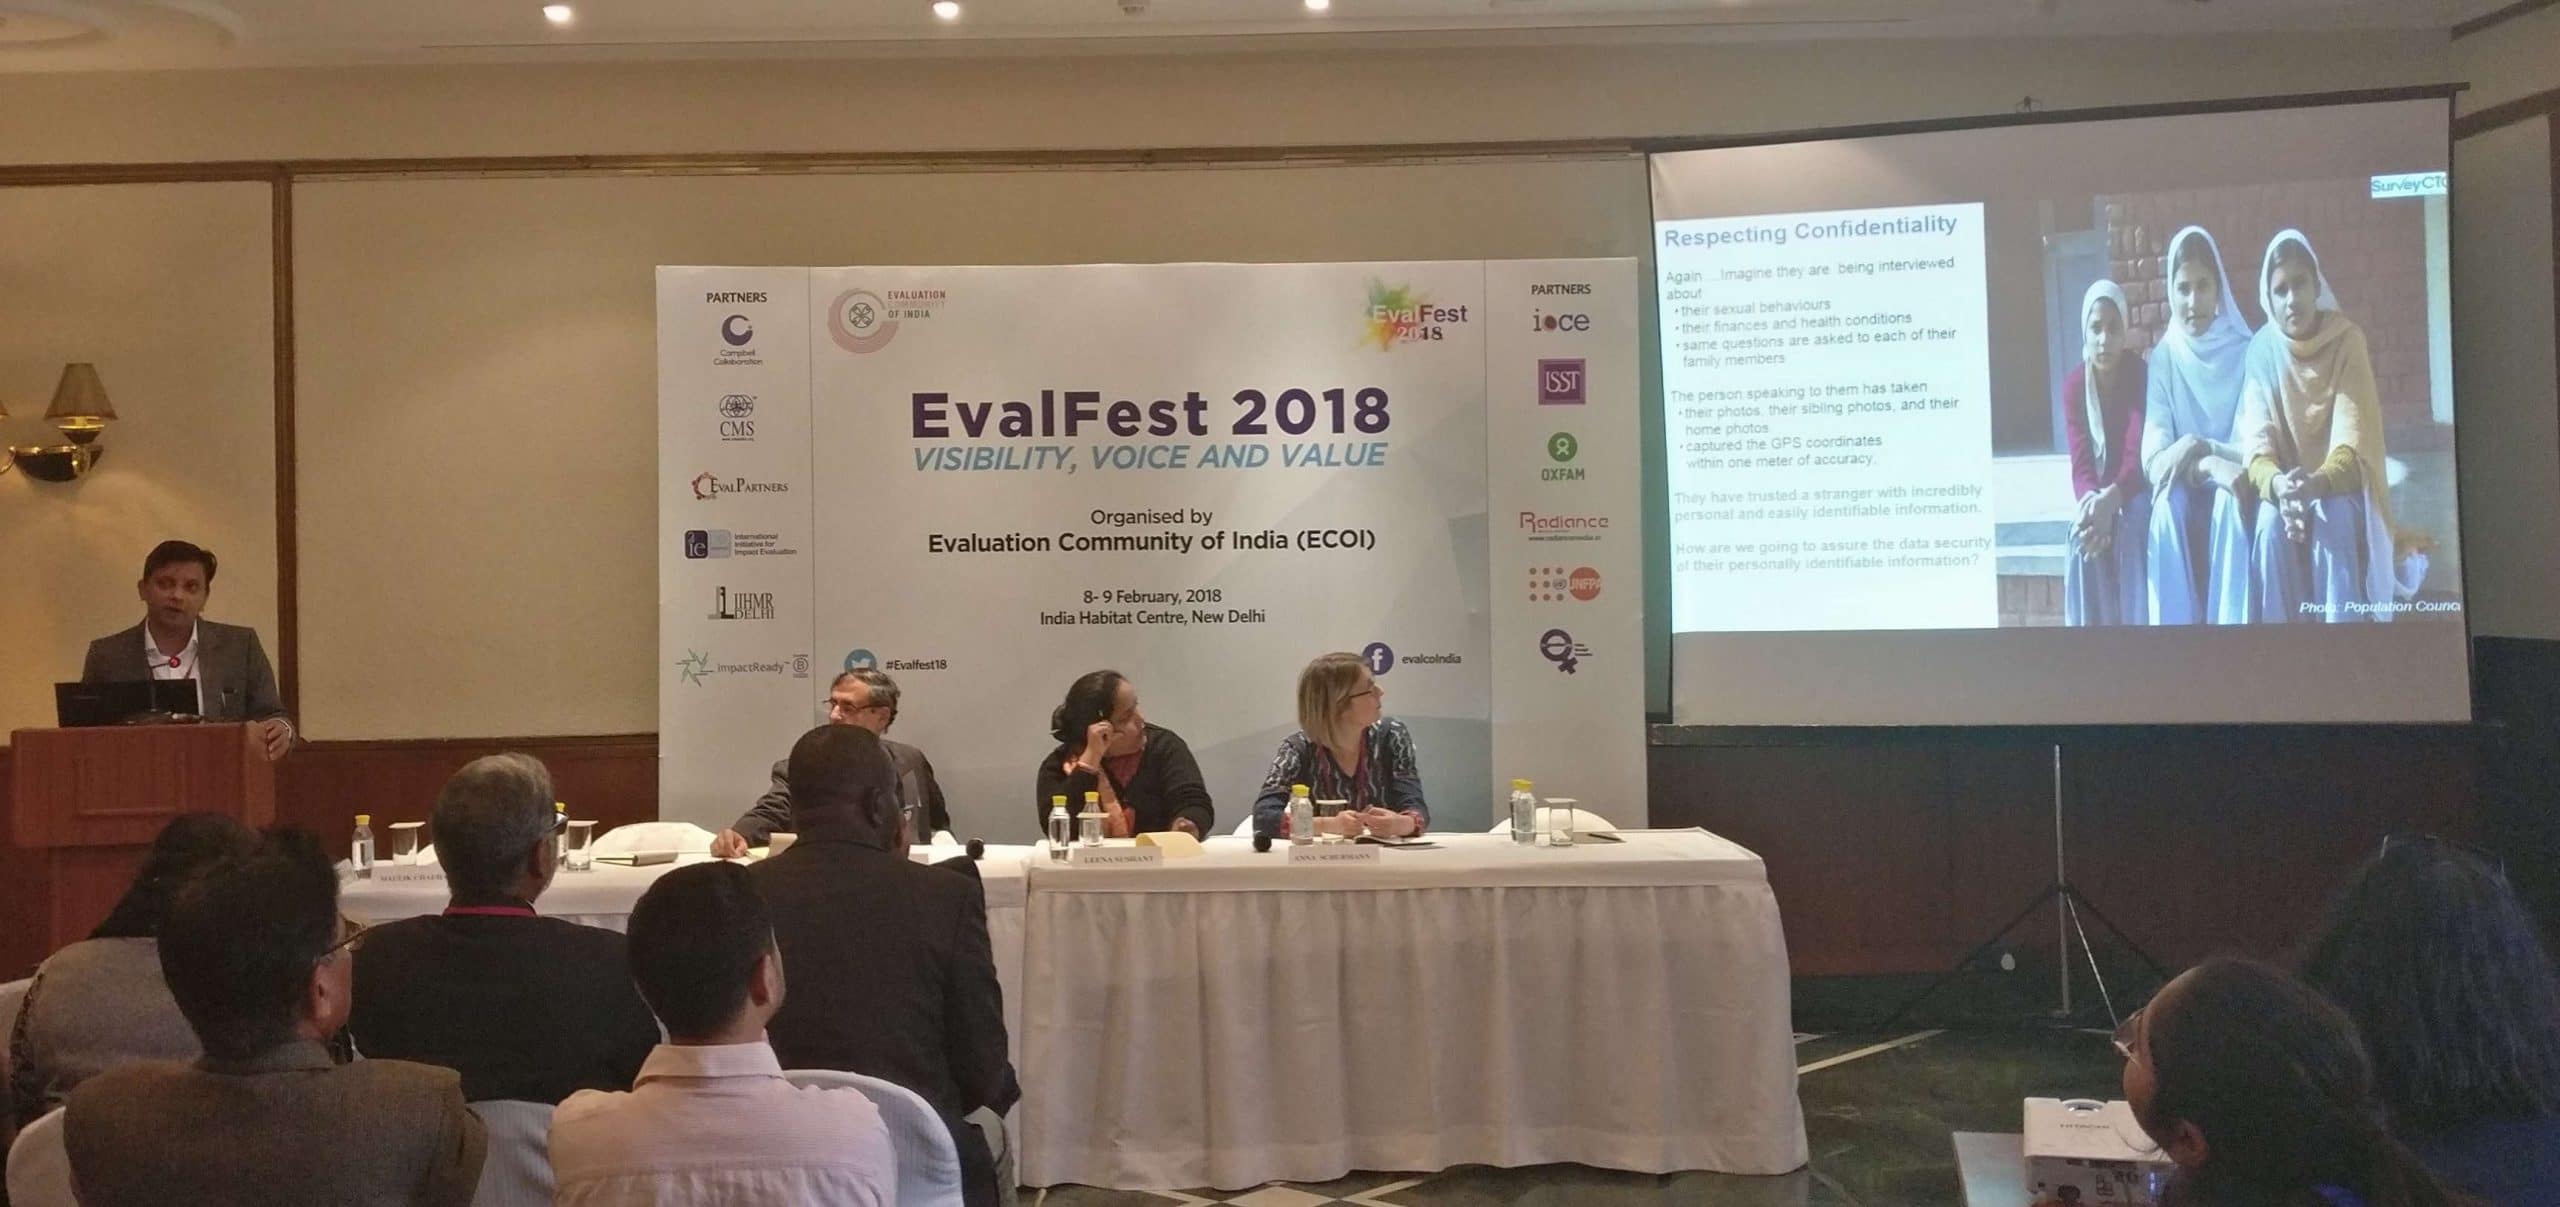 SurveyCTO's presentation during EvalFest 2018